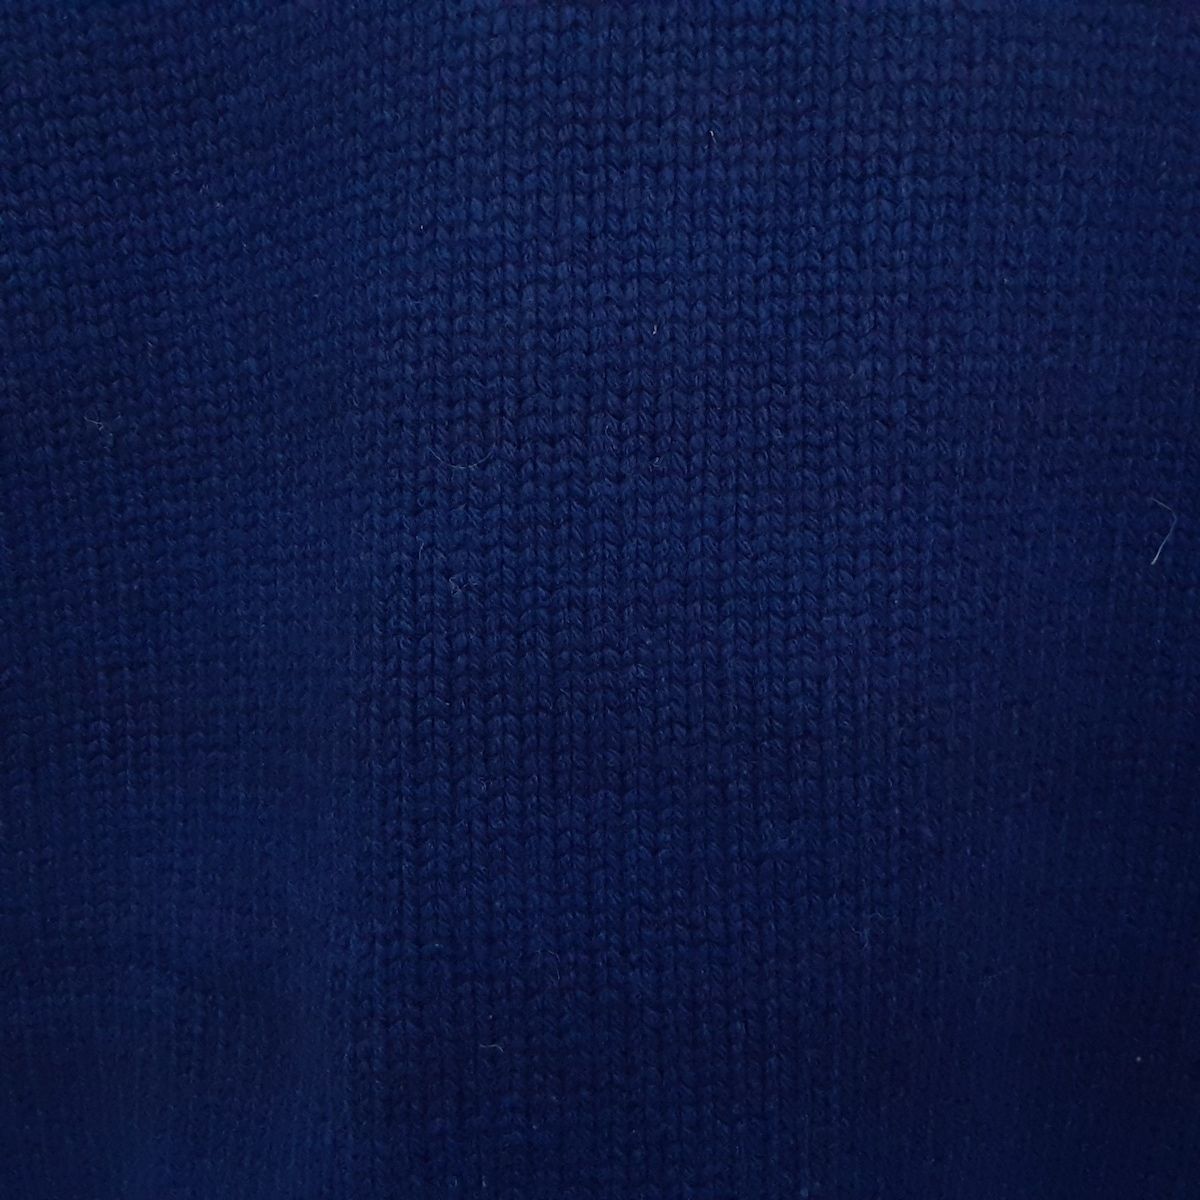 THE ROW(ザロウ) 半袖セーター サイズXS レディース美品 - AP417 ダークネイビー カシミヤ混 - メルカリ